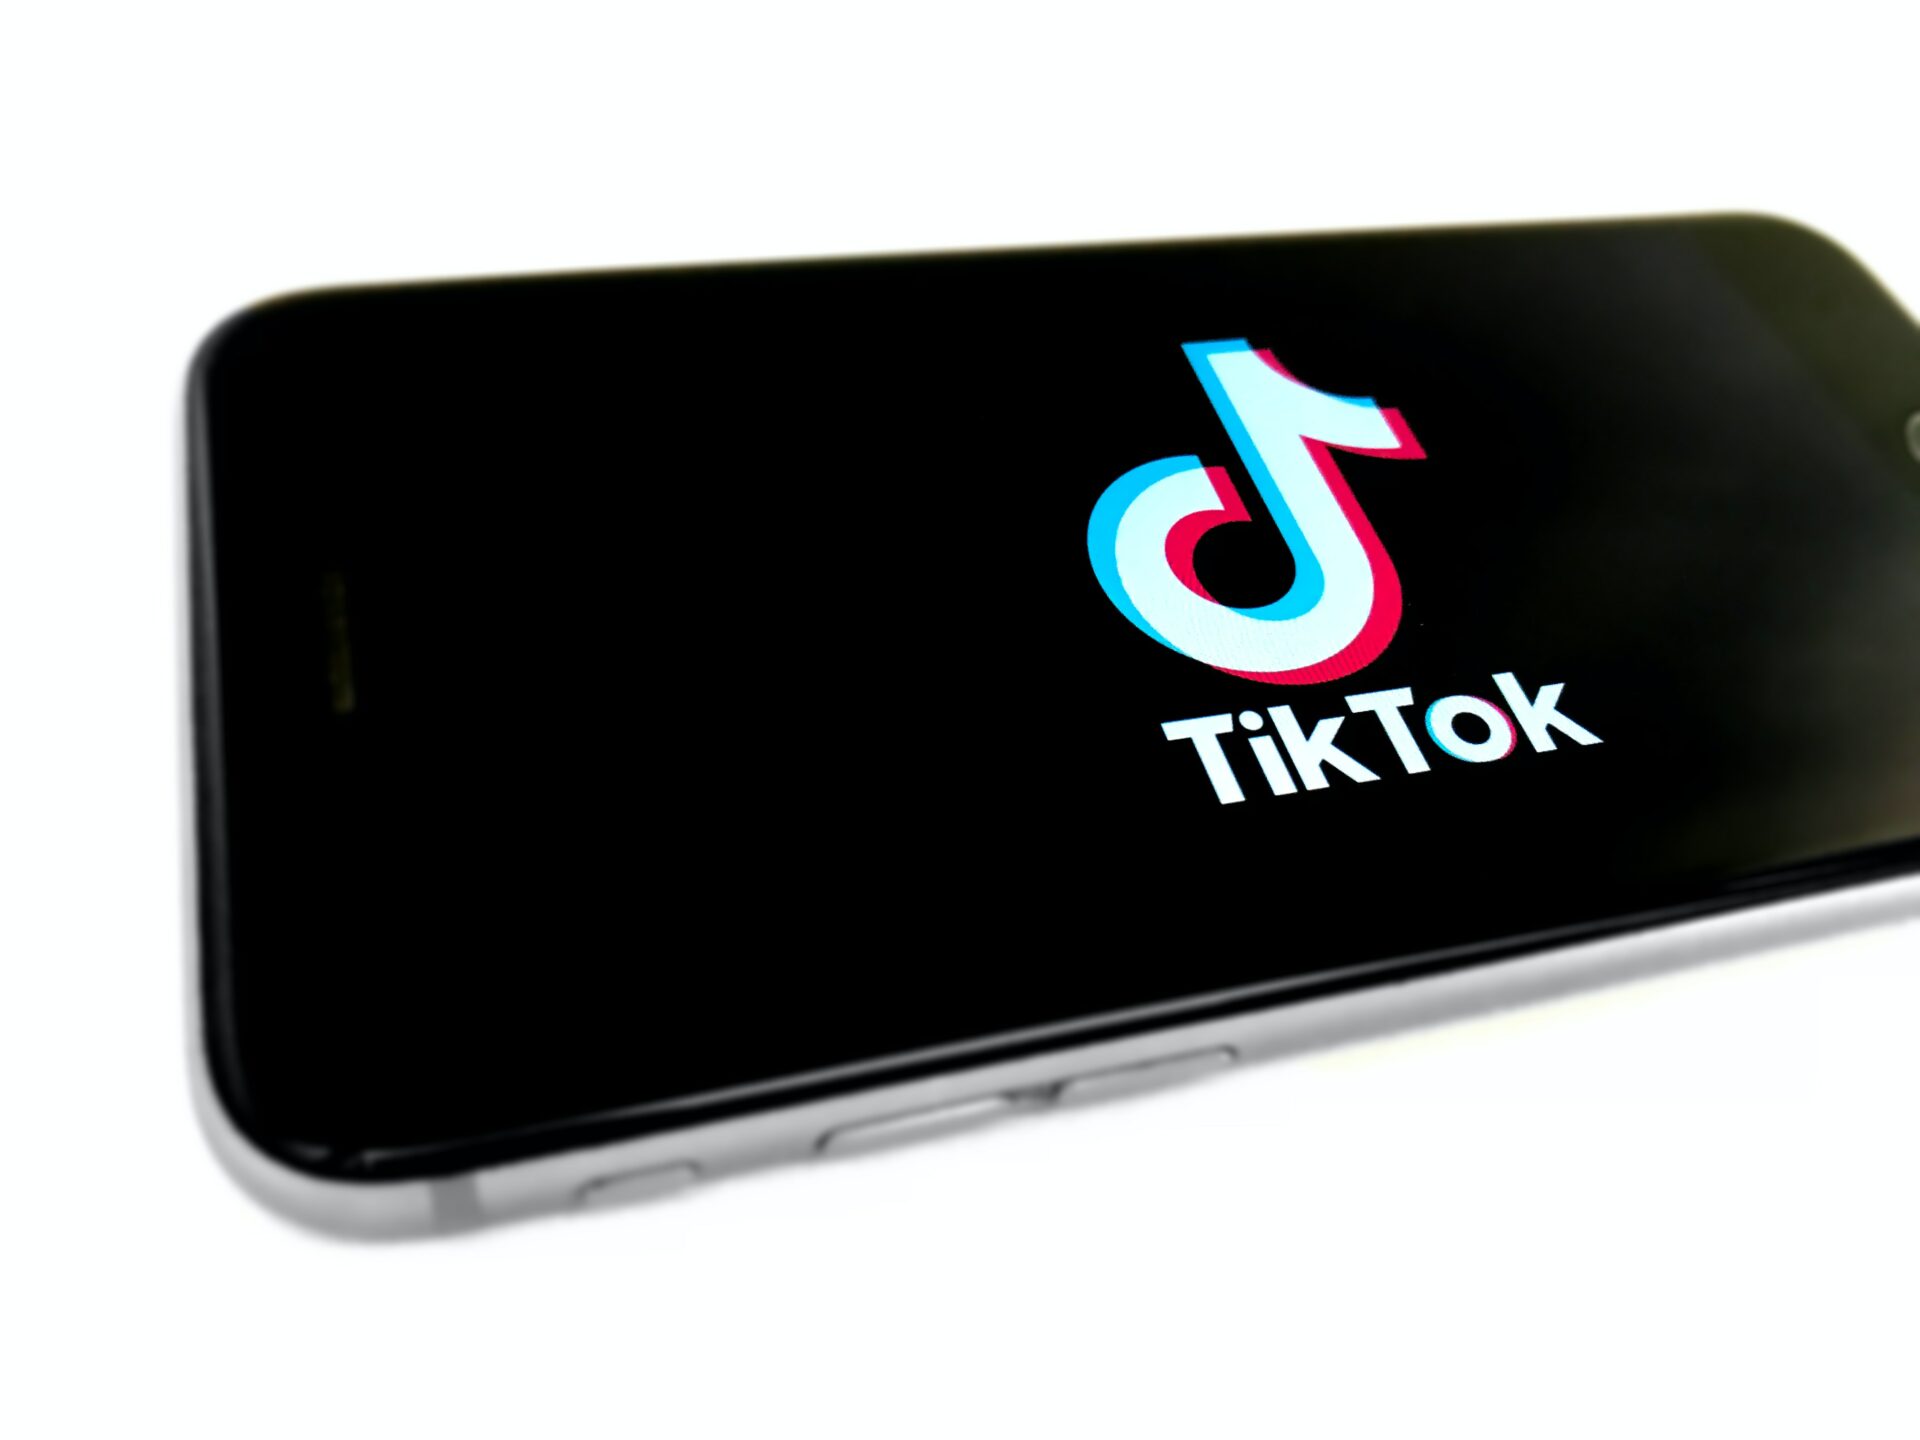 Samba Digital in France: 2 billion views on TikTok